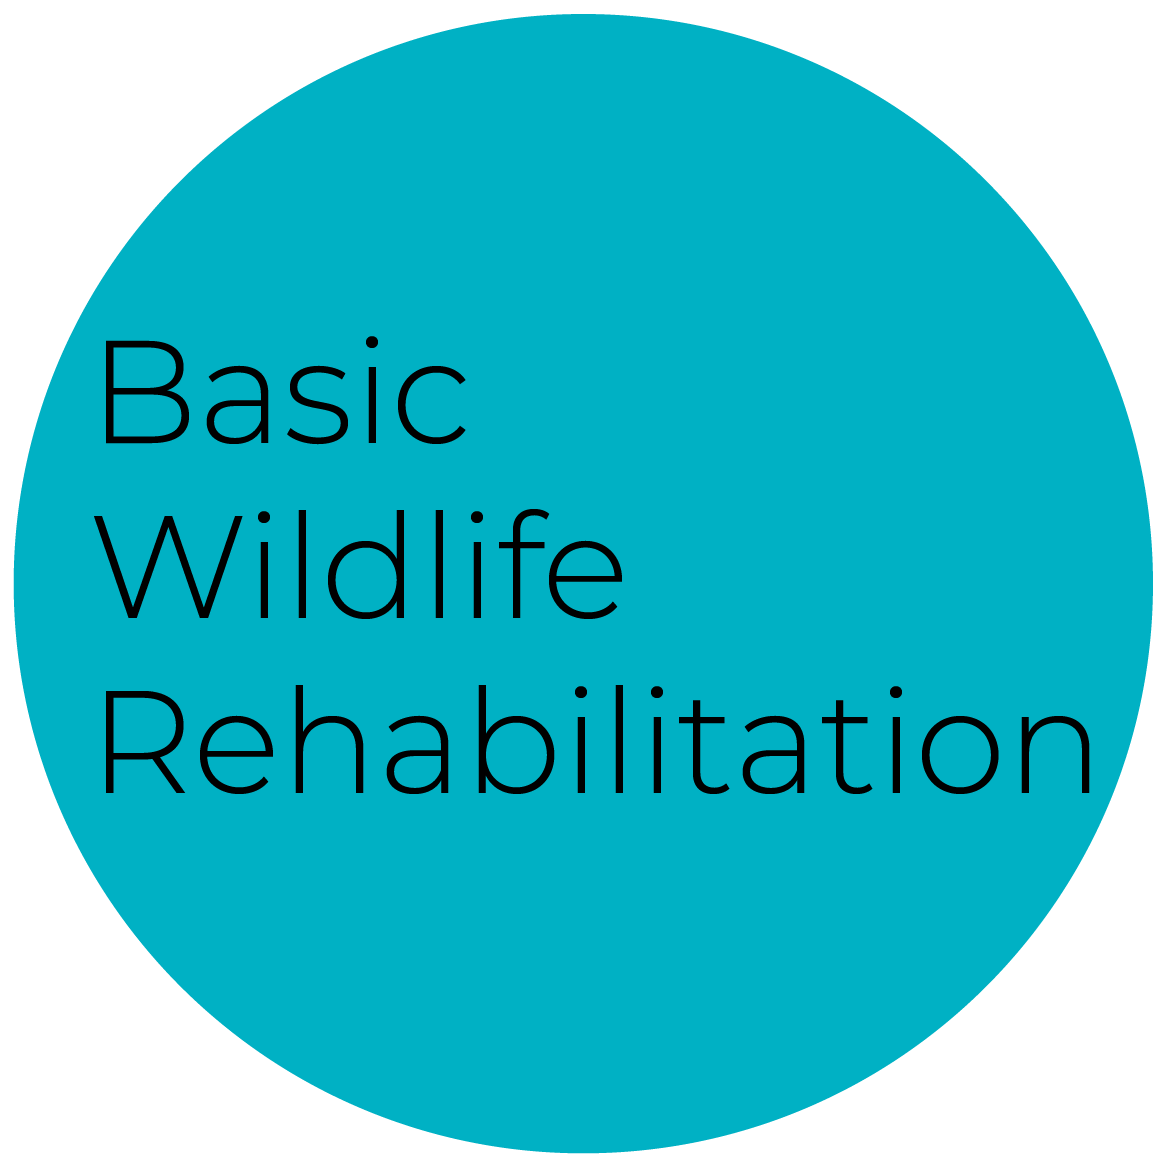 Feathers, Native Culture, and Rehabilitation - International Wildlife  Rehabilitation Council